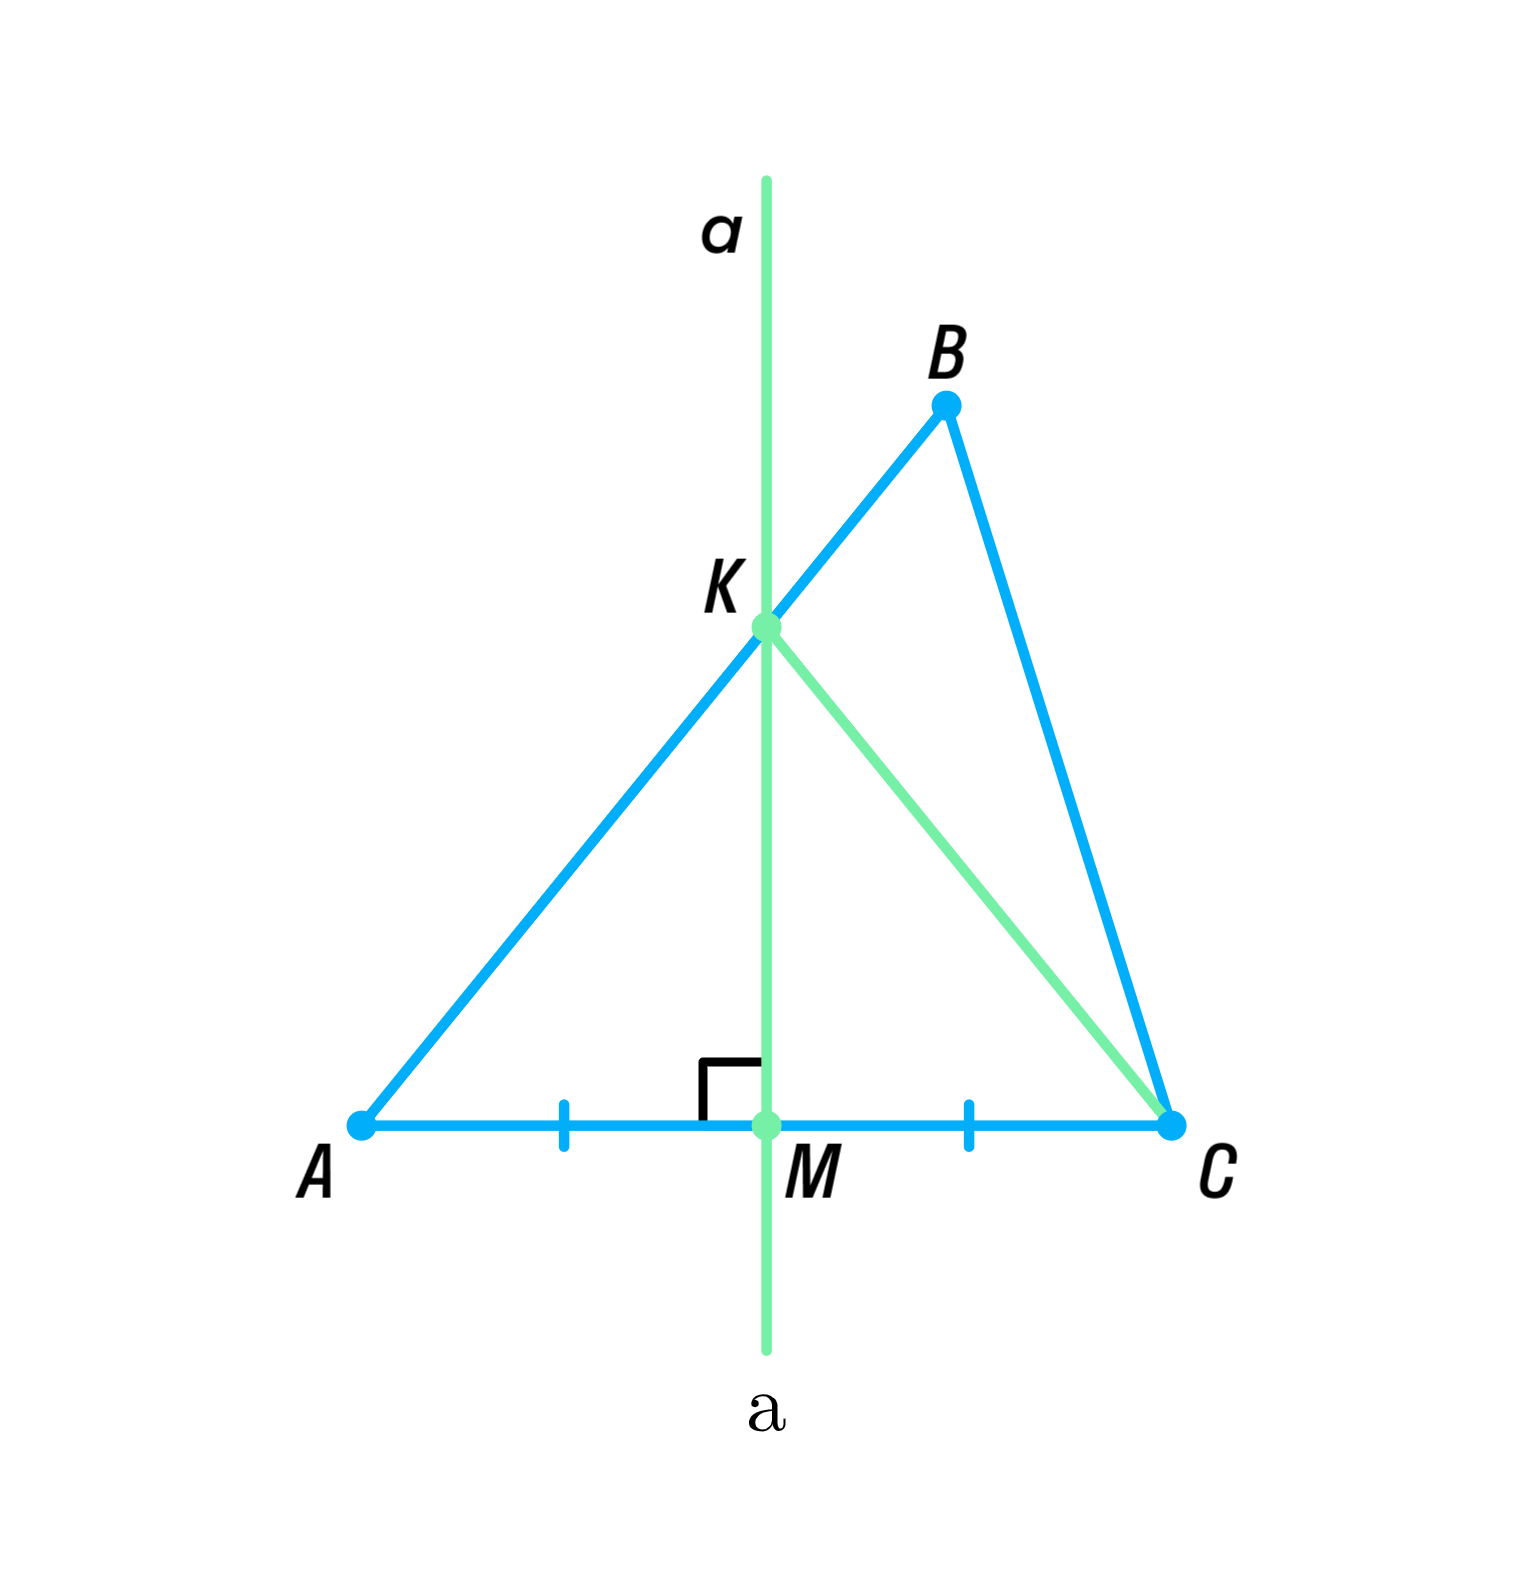 Серединный вектор. На серединном перпендикуляре отрезка АВ взята точка м. Серединный перпендикуляр к стороне ab равнобедренного